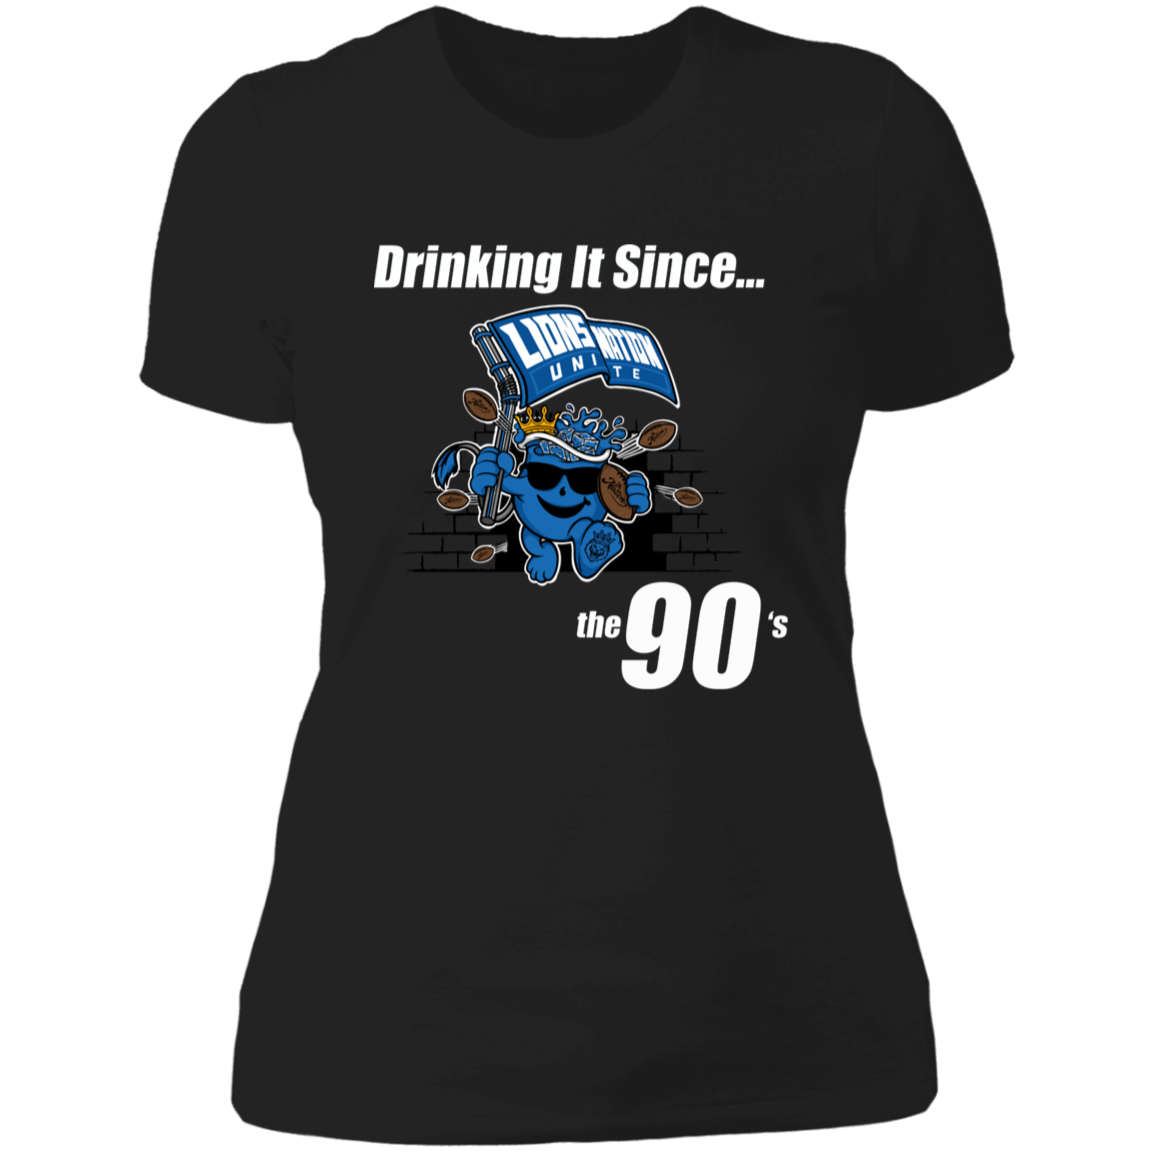 Drinking It Since the 90's Women's T-Shirt